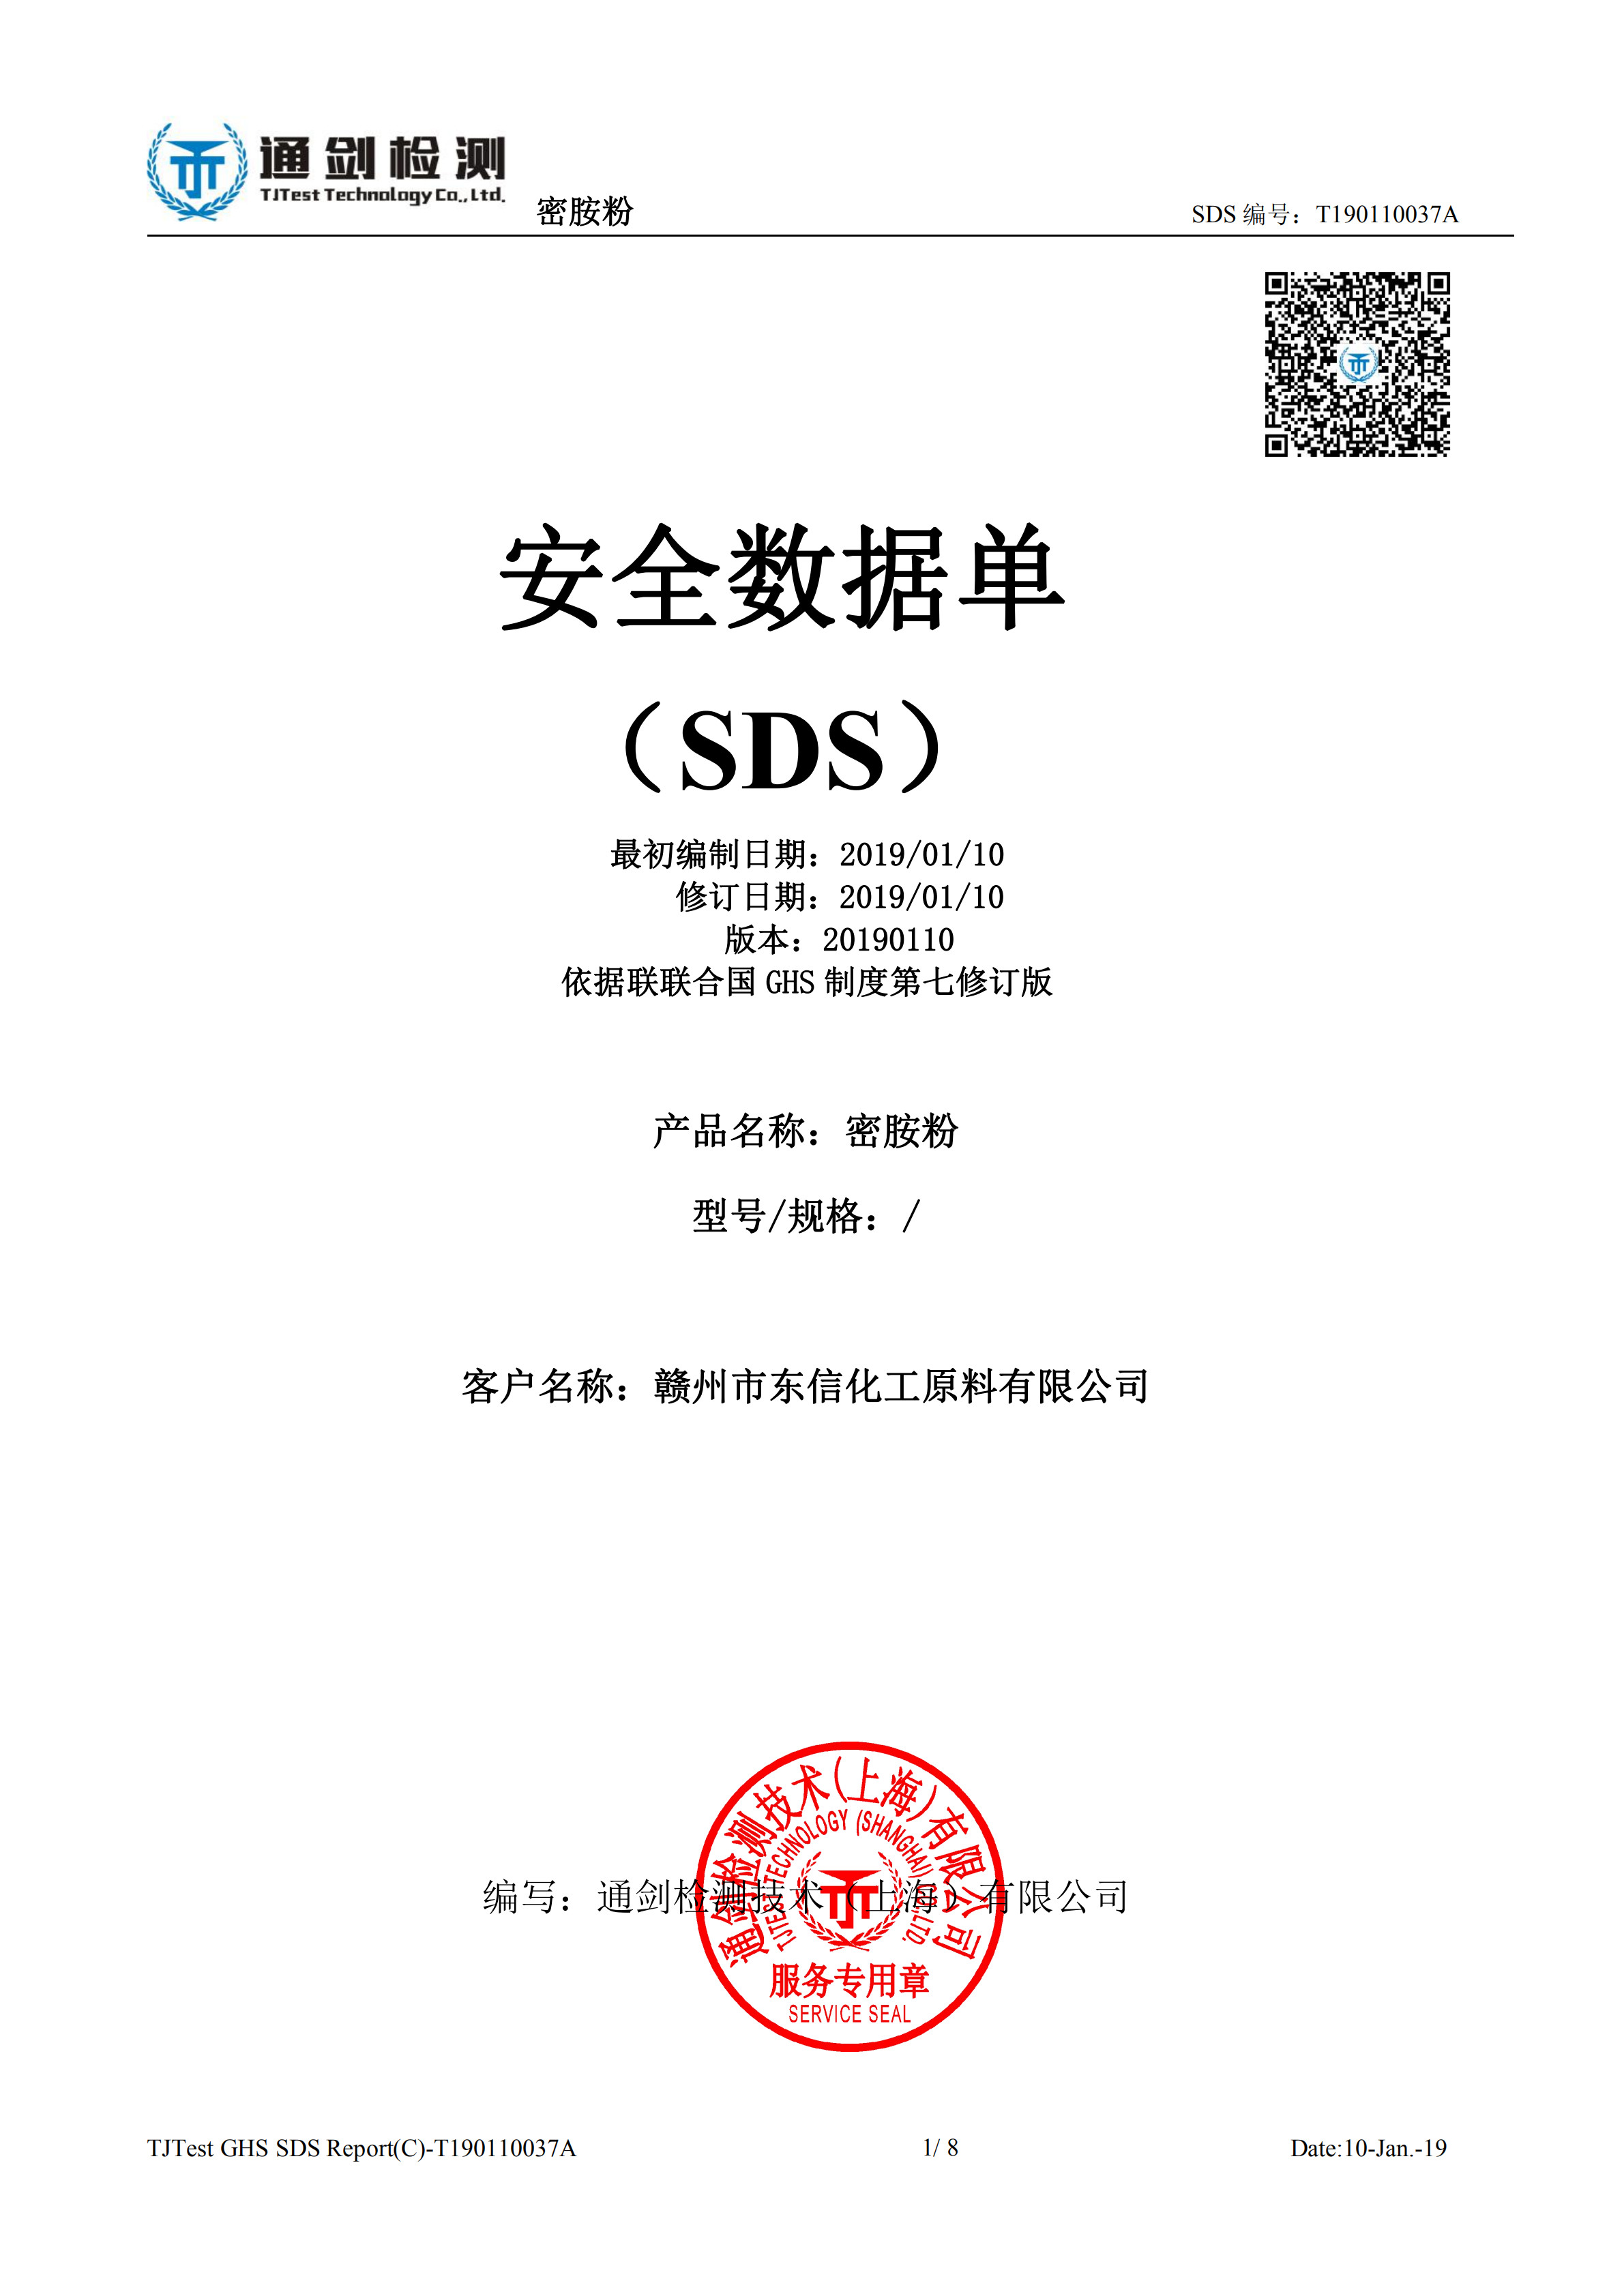 Dongxin Melamine (Xiamen) Chemical Co., Ltd. Certifications